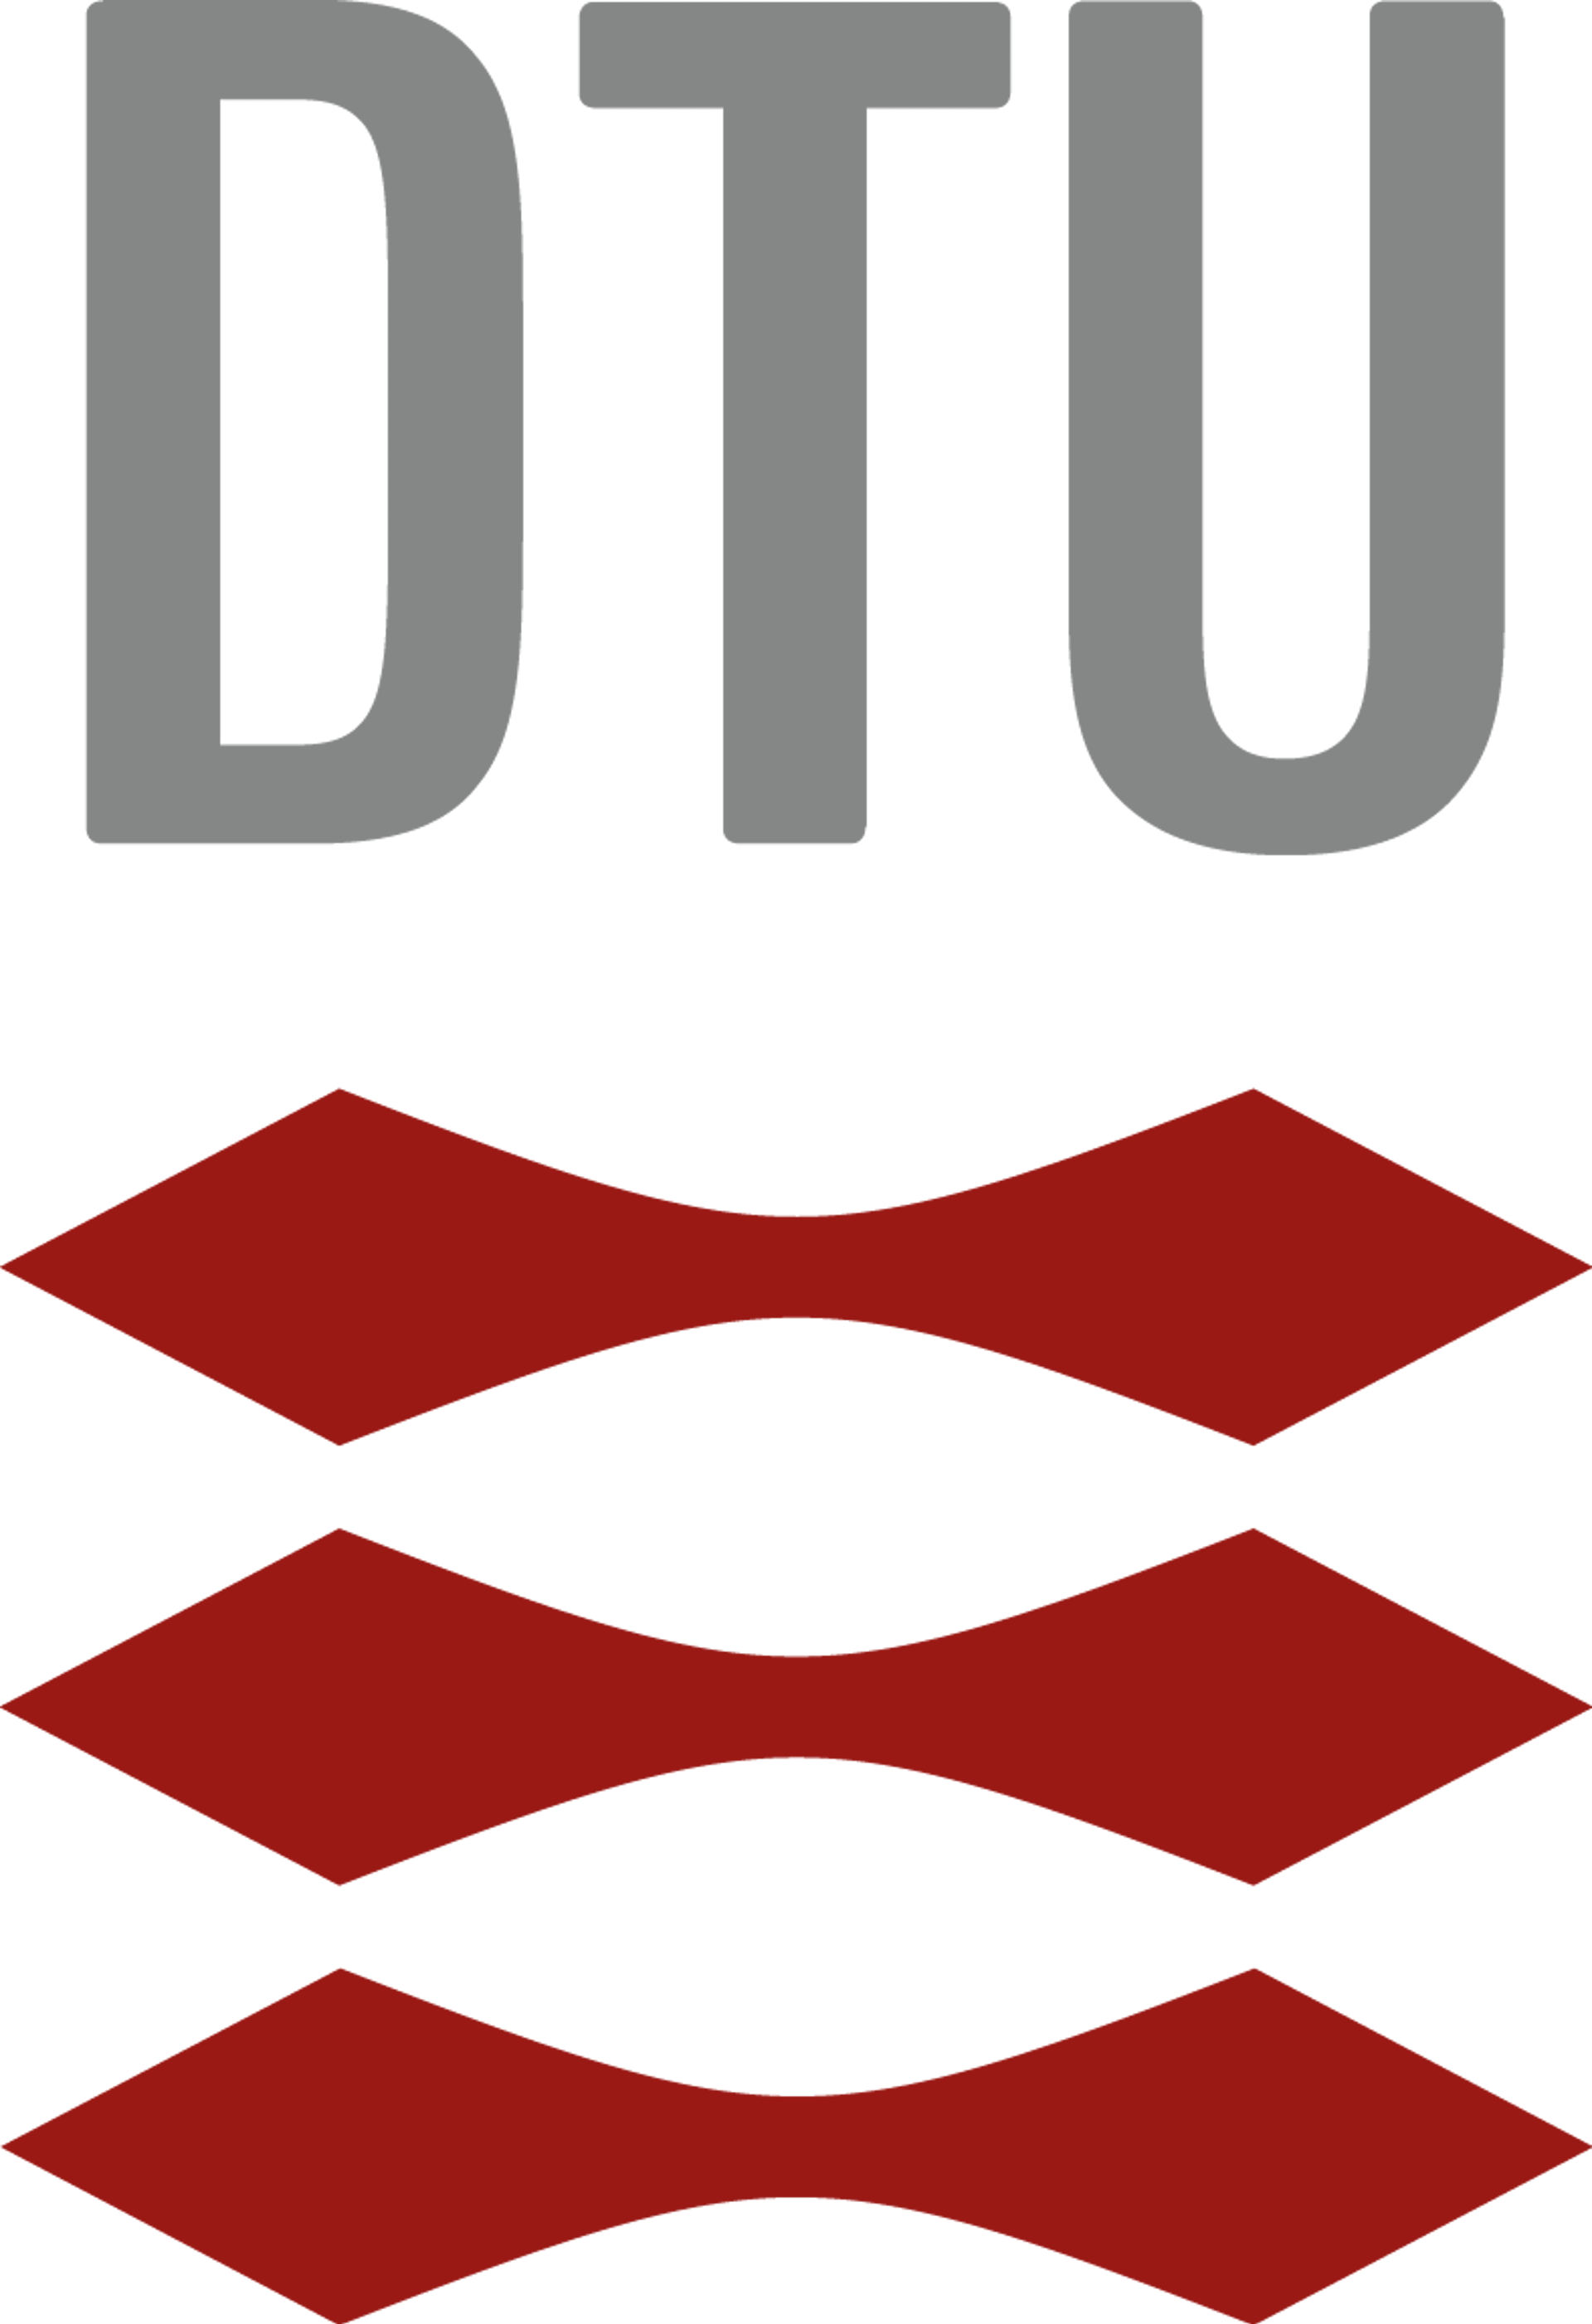 DTU-Danmarks Tekniske Universitet